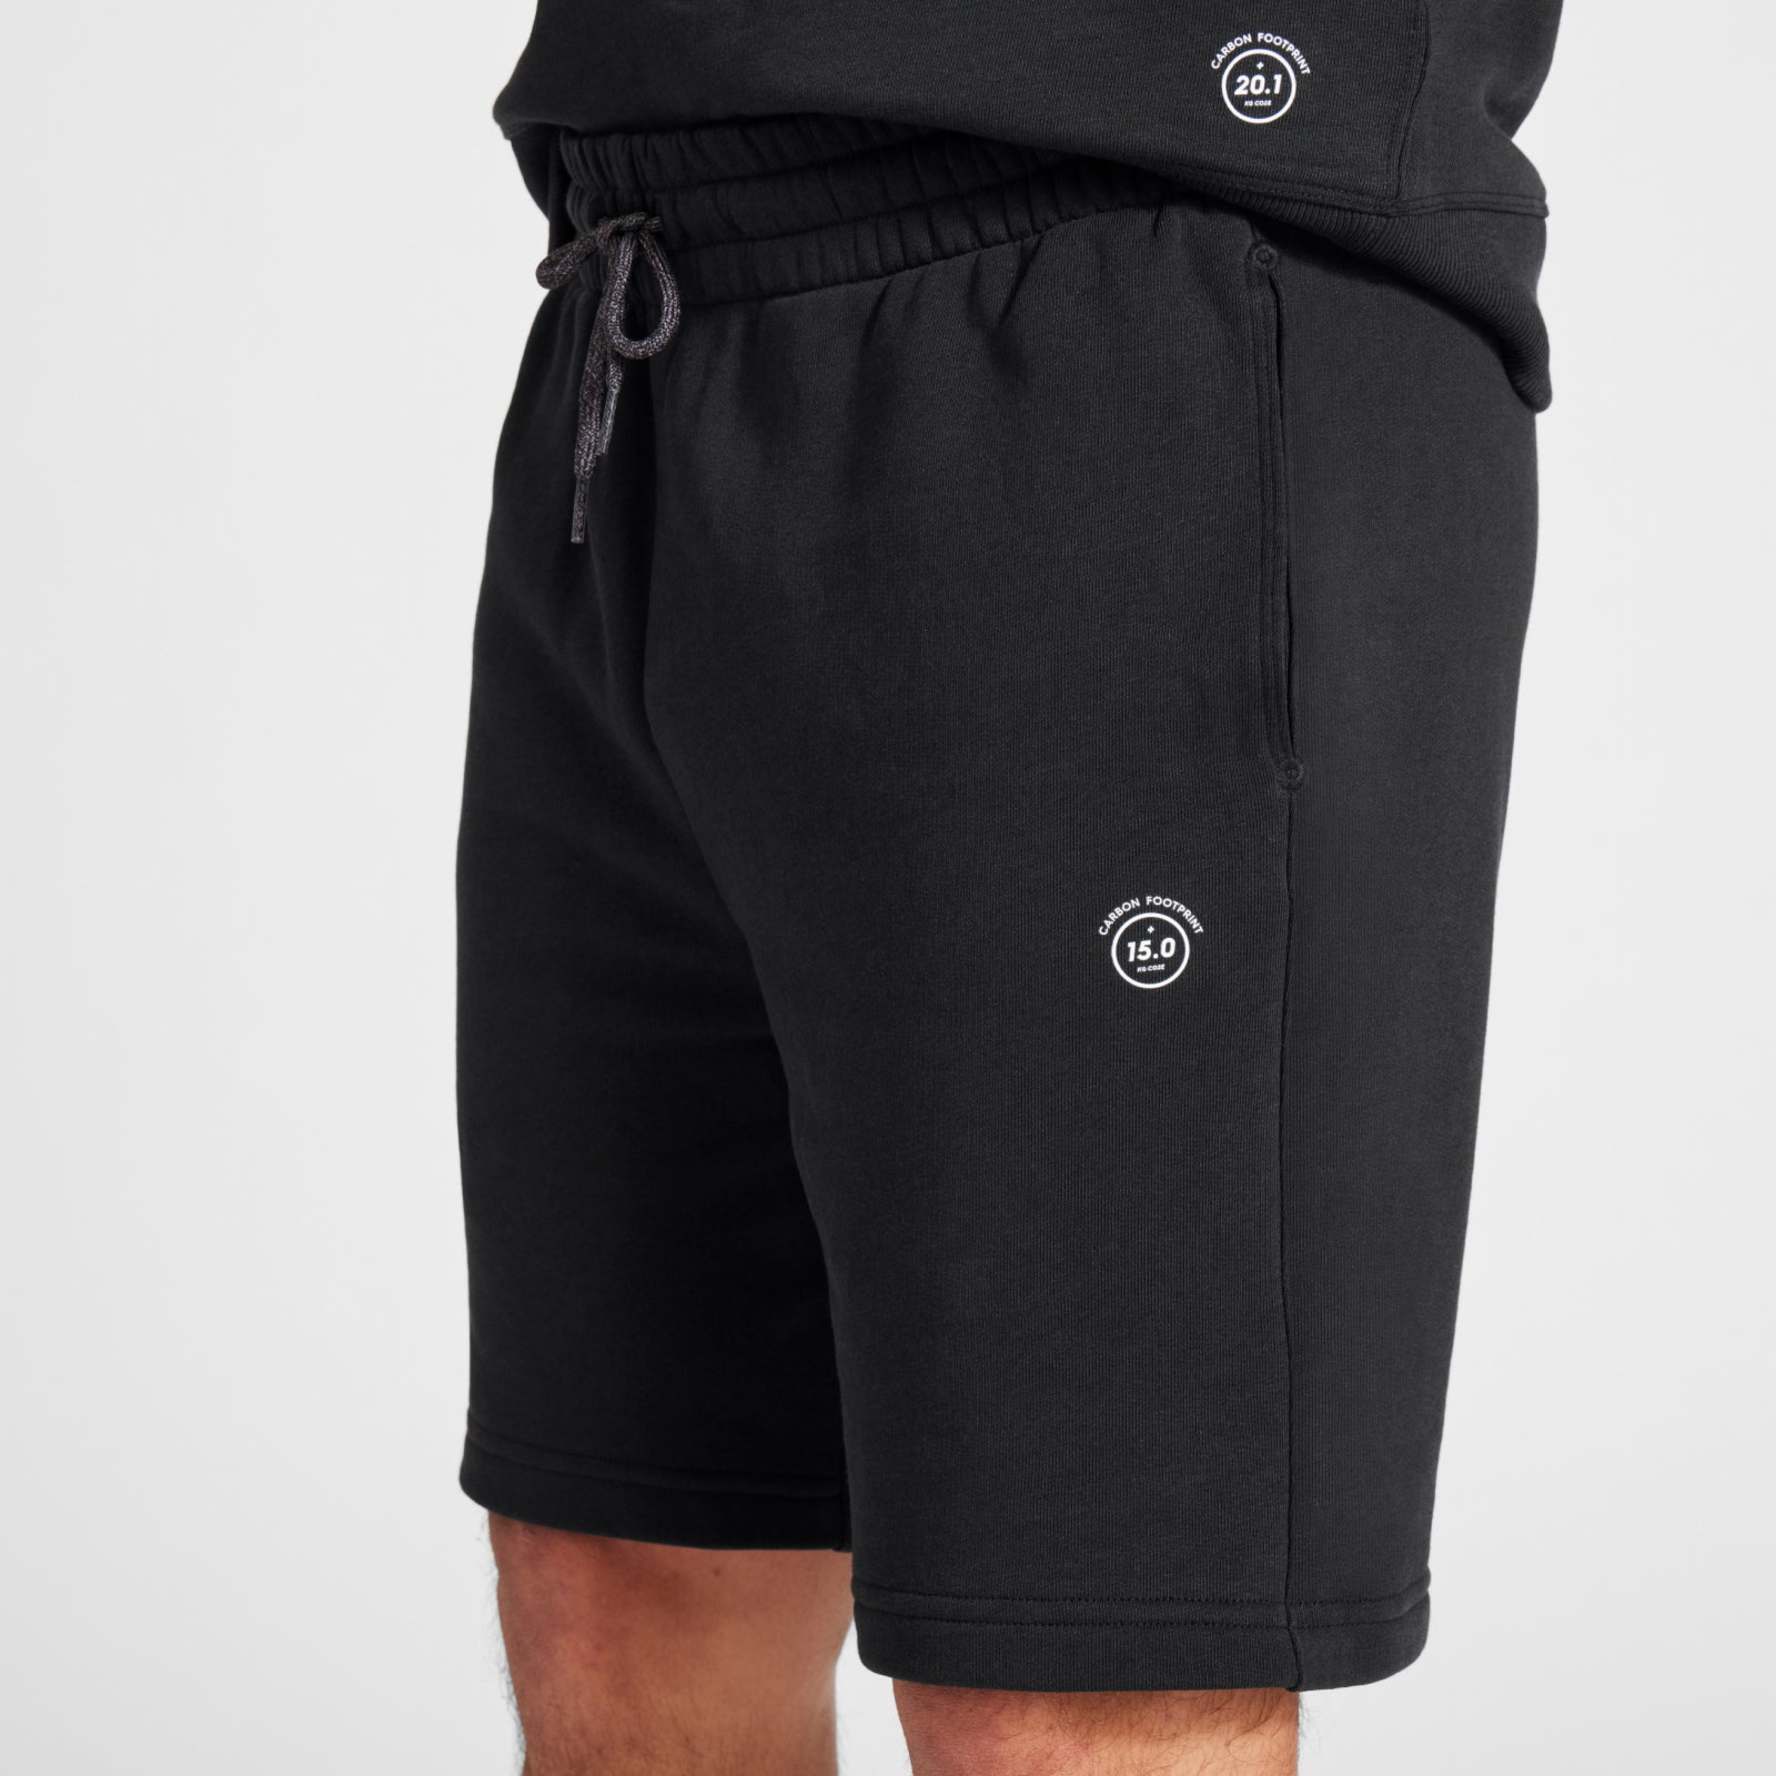 Men's R&R Sweat Short, Lounge Shorts